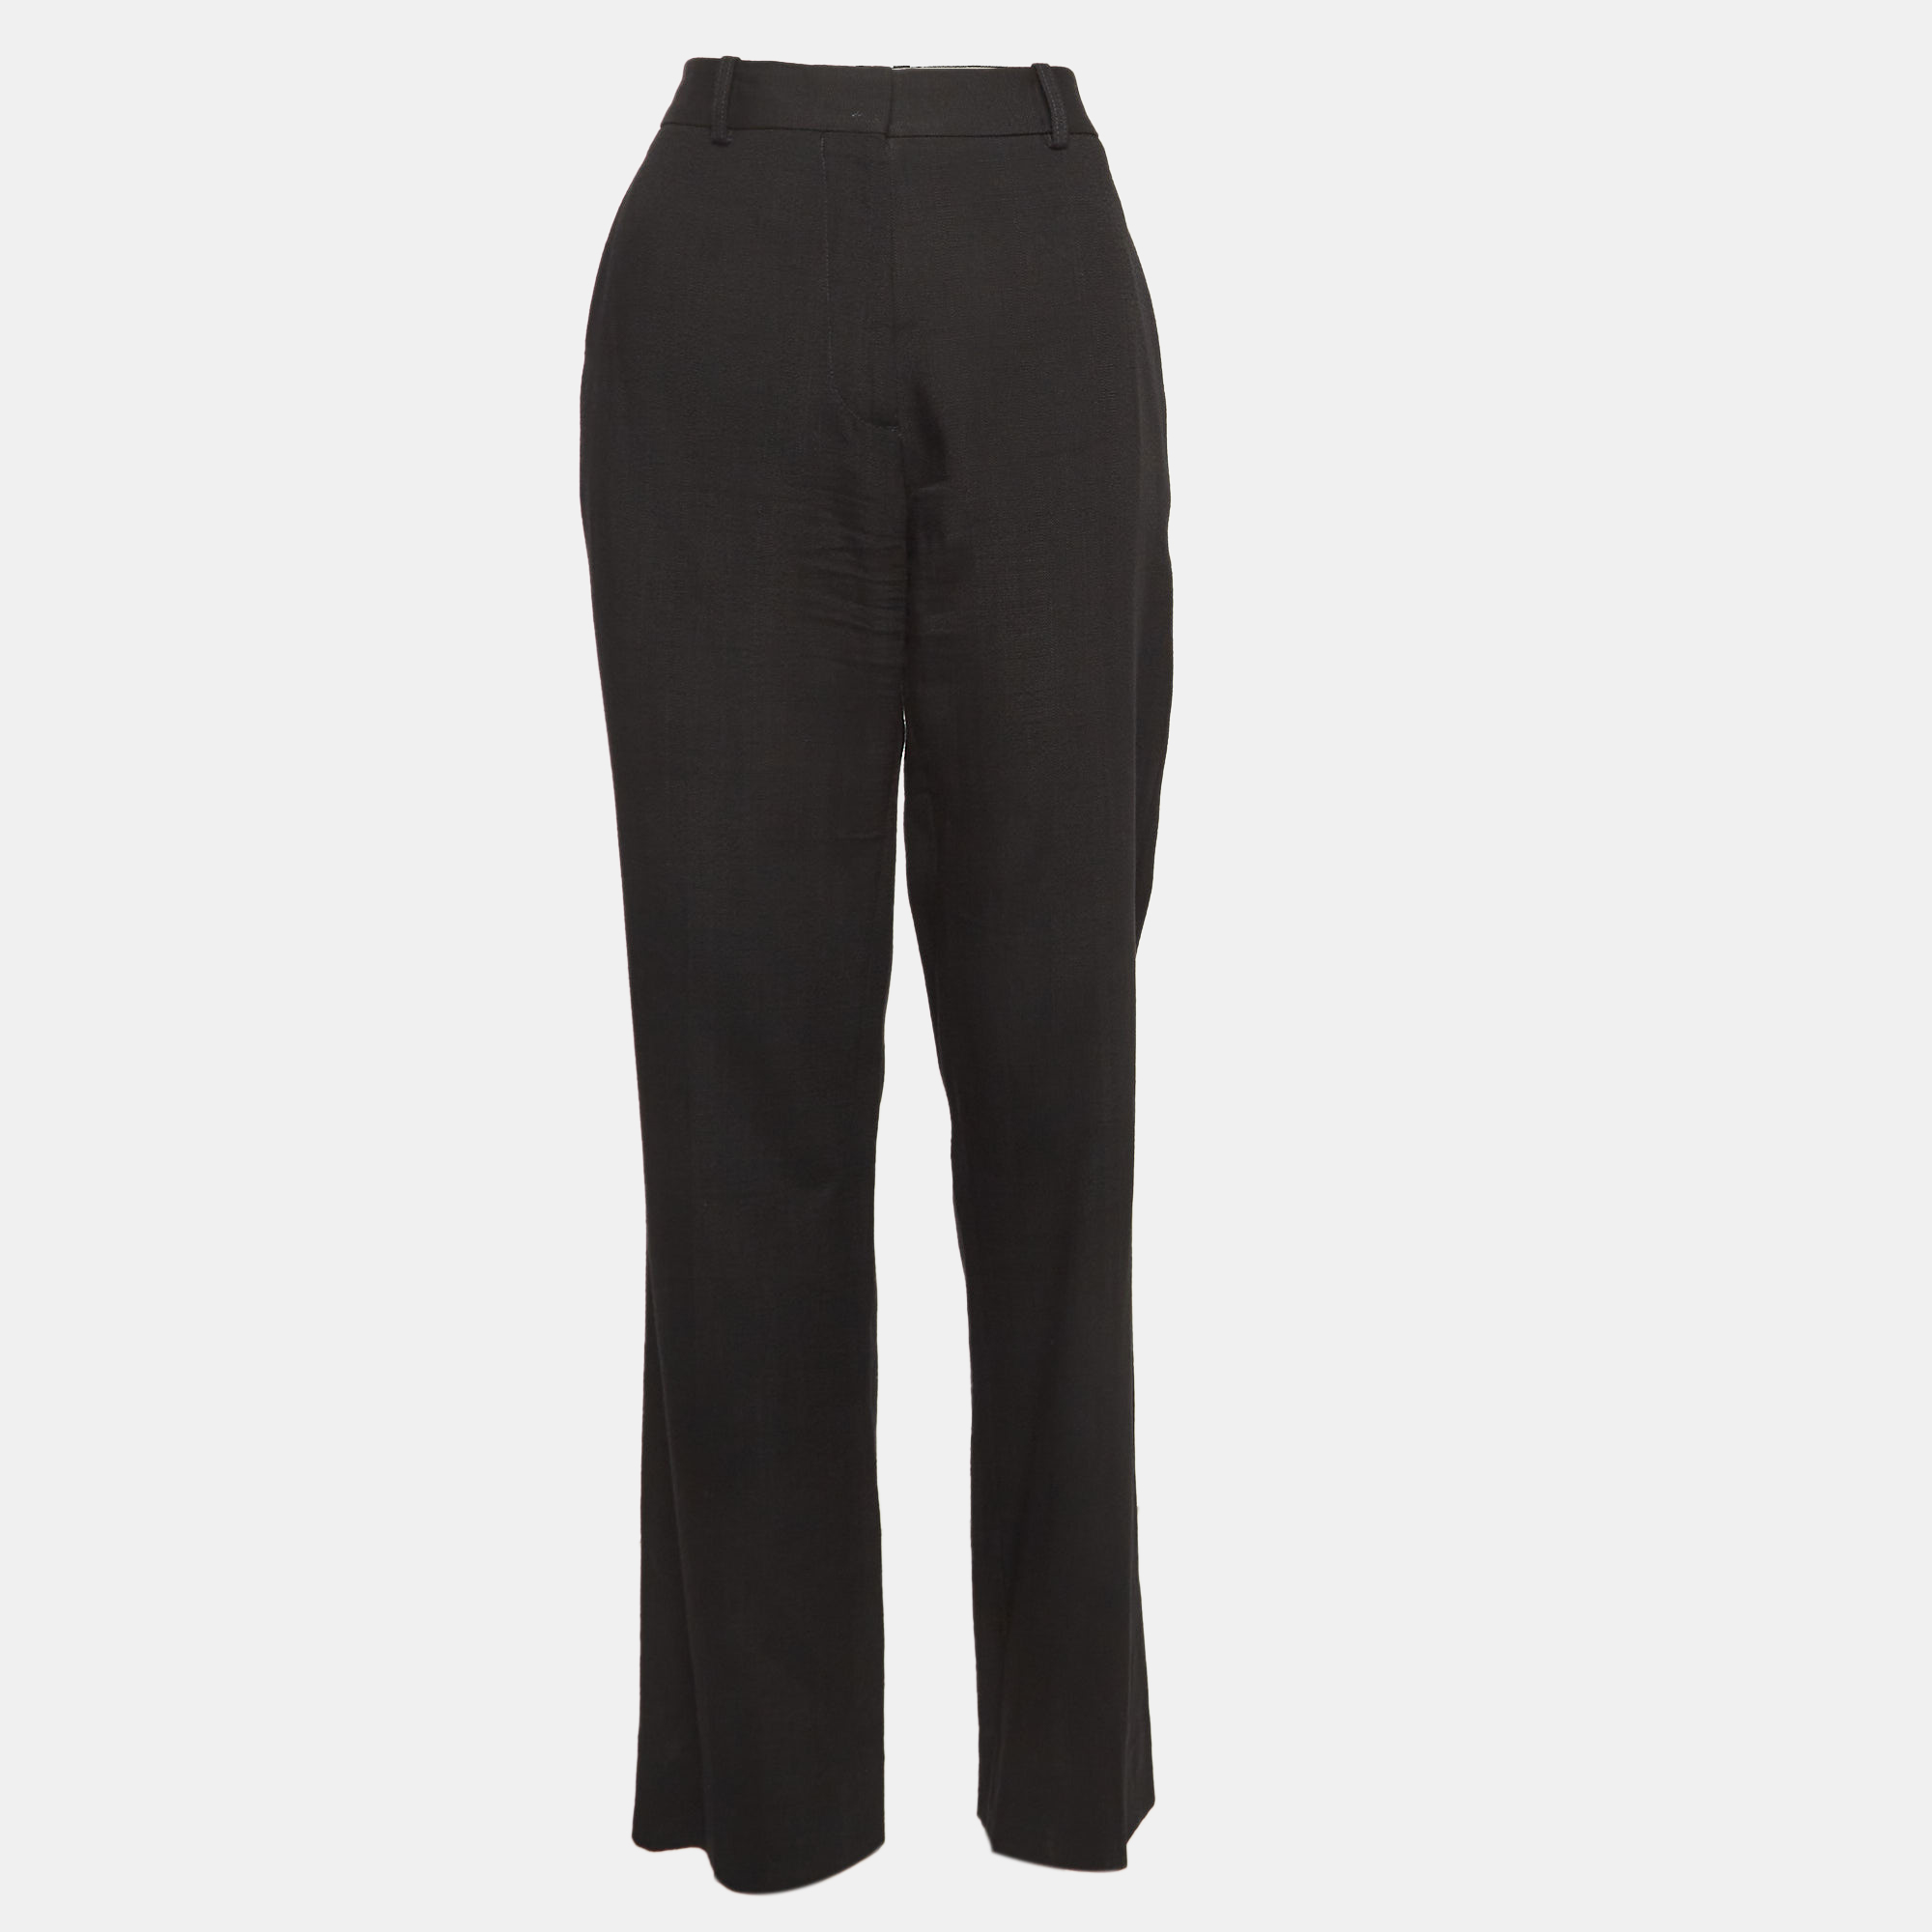 Victoria beckham black crepe straight leg trousers m